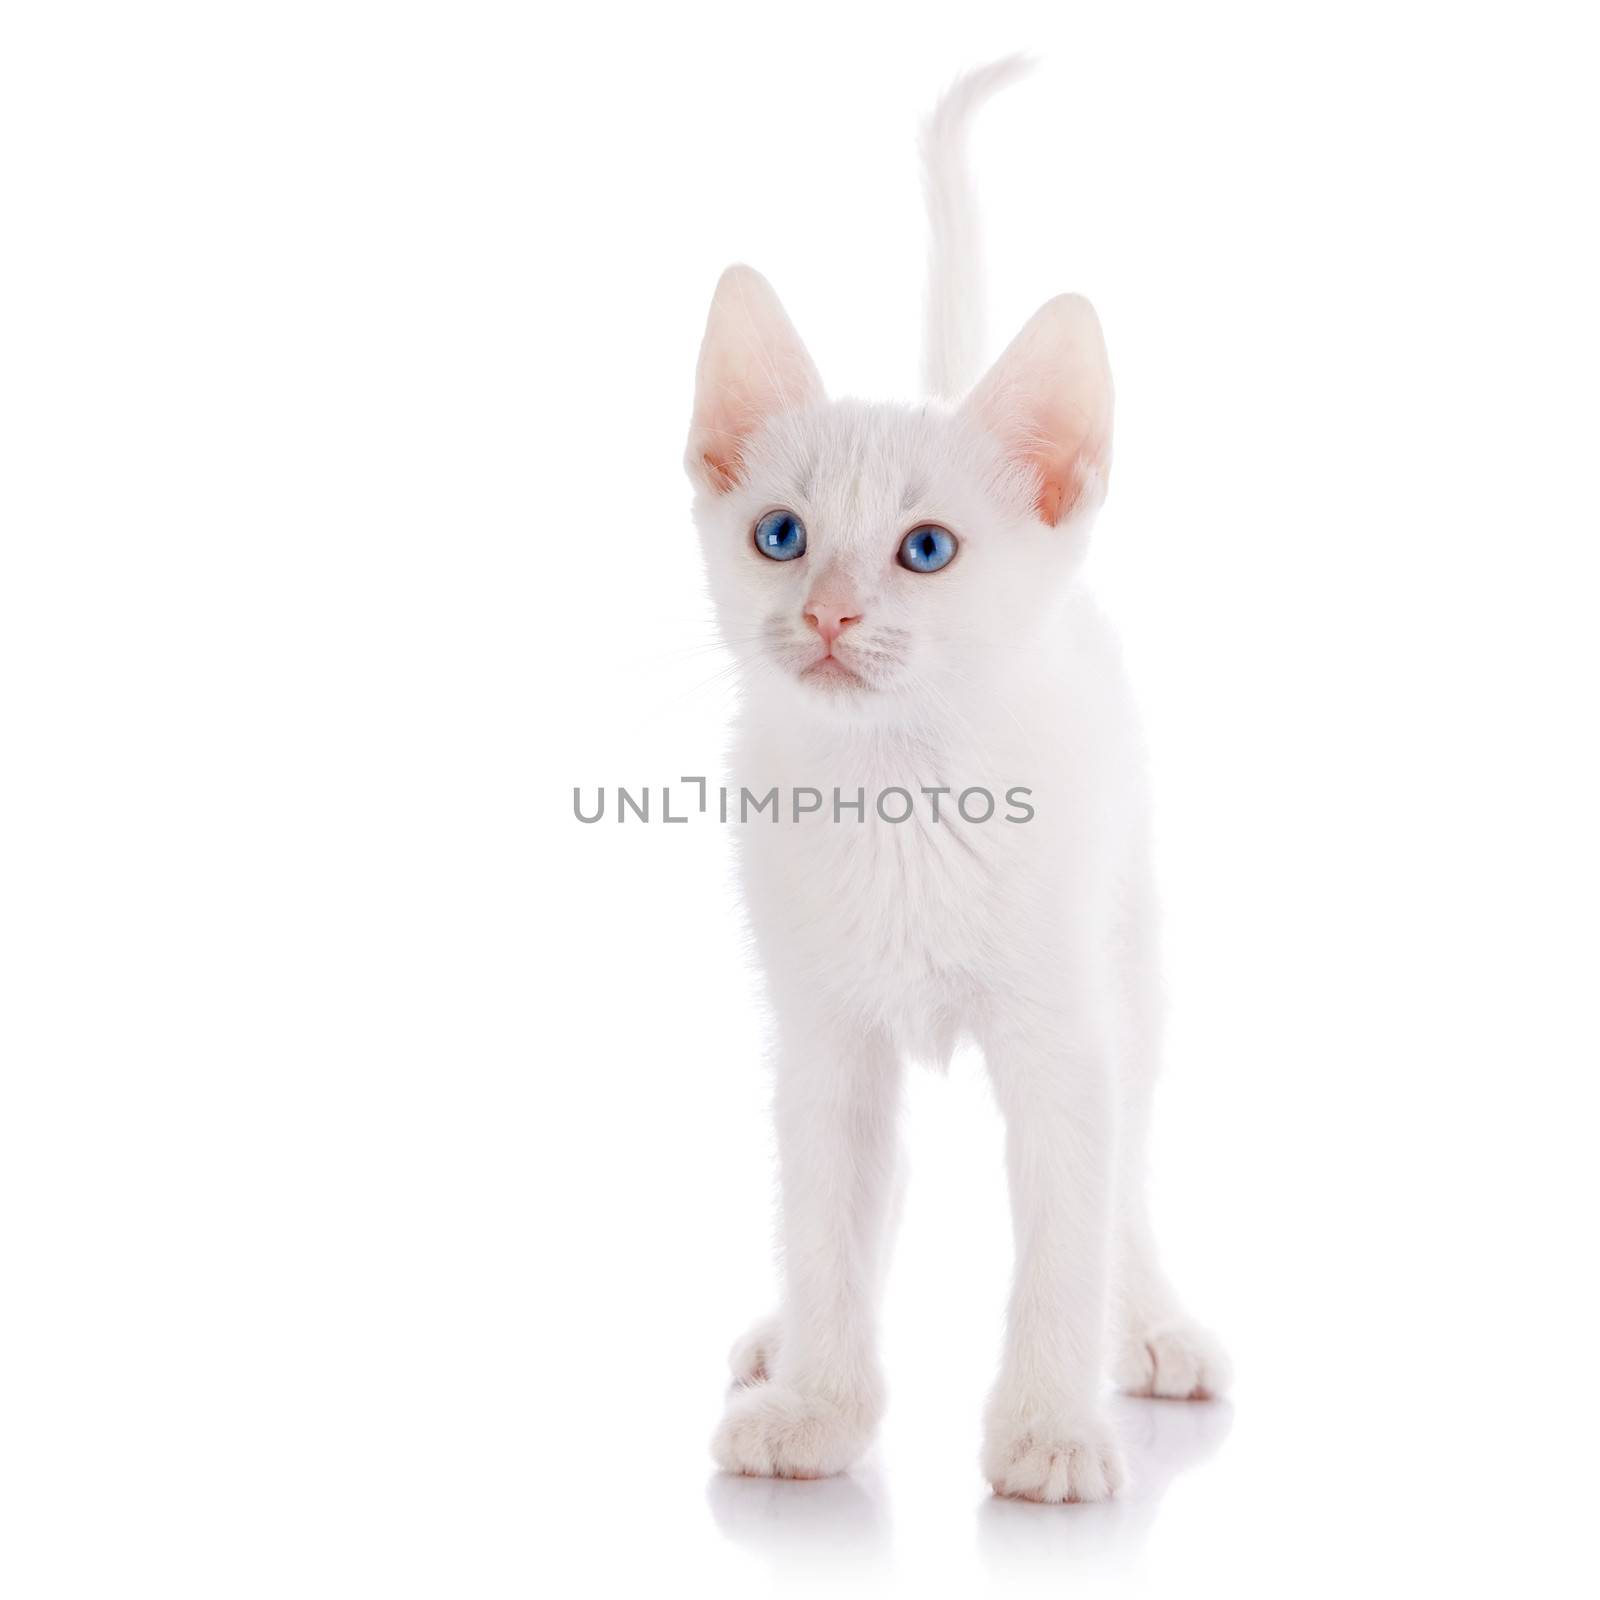 The white kitten with blue eyes costs by Azaliya